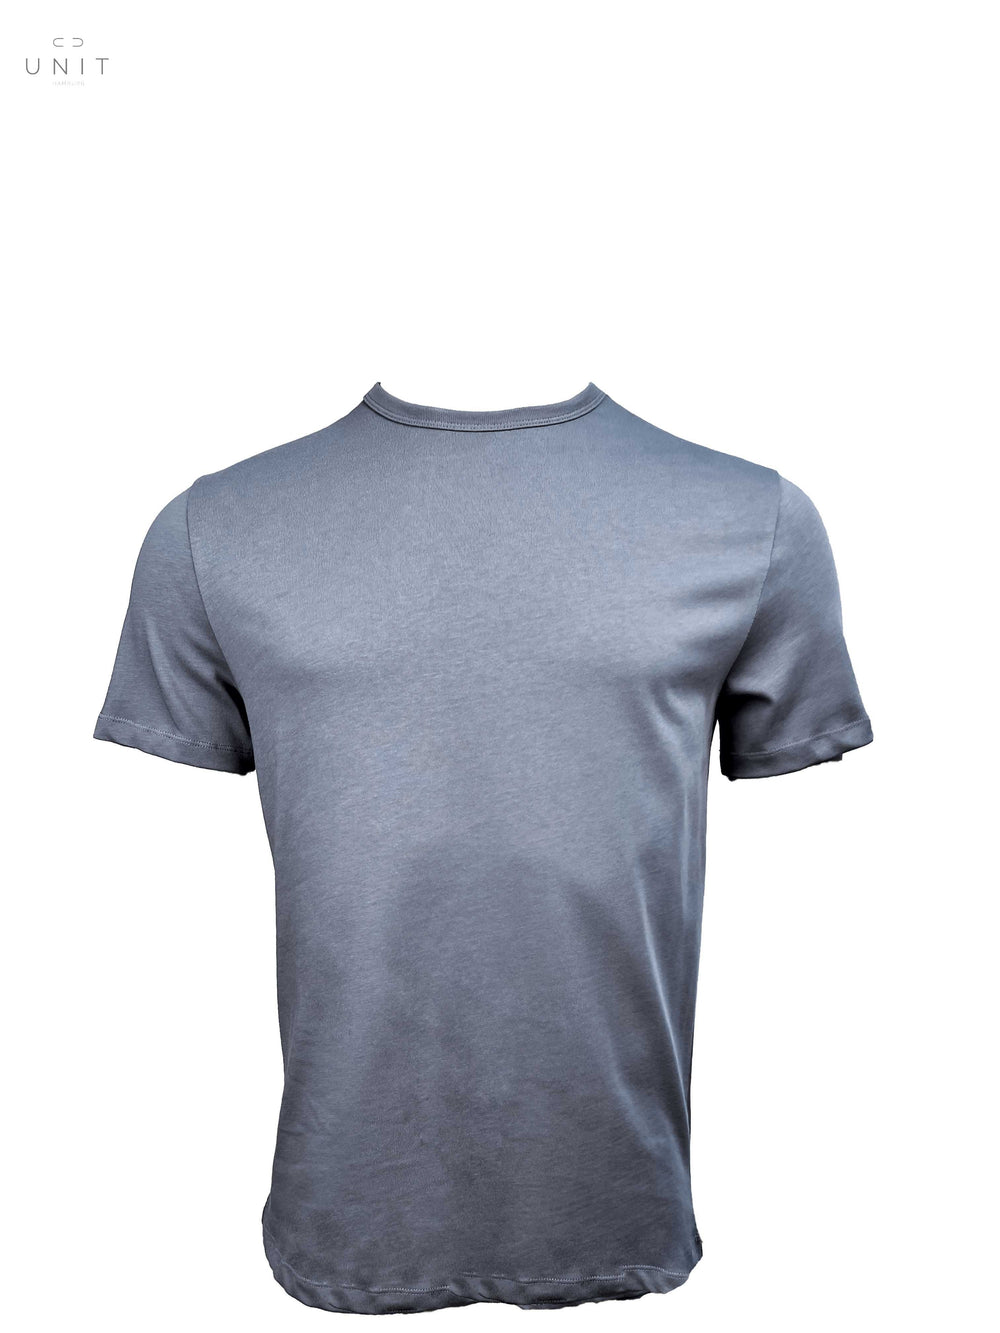 Kiefermann 432-21115 Richard T-Shirt crew neck bleu